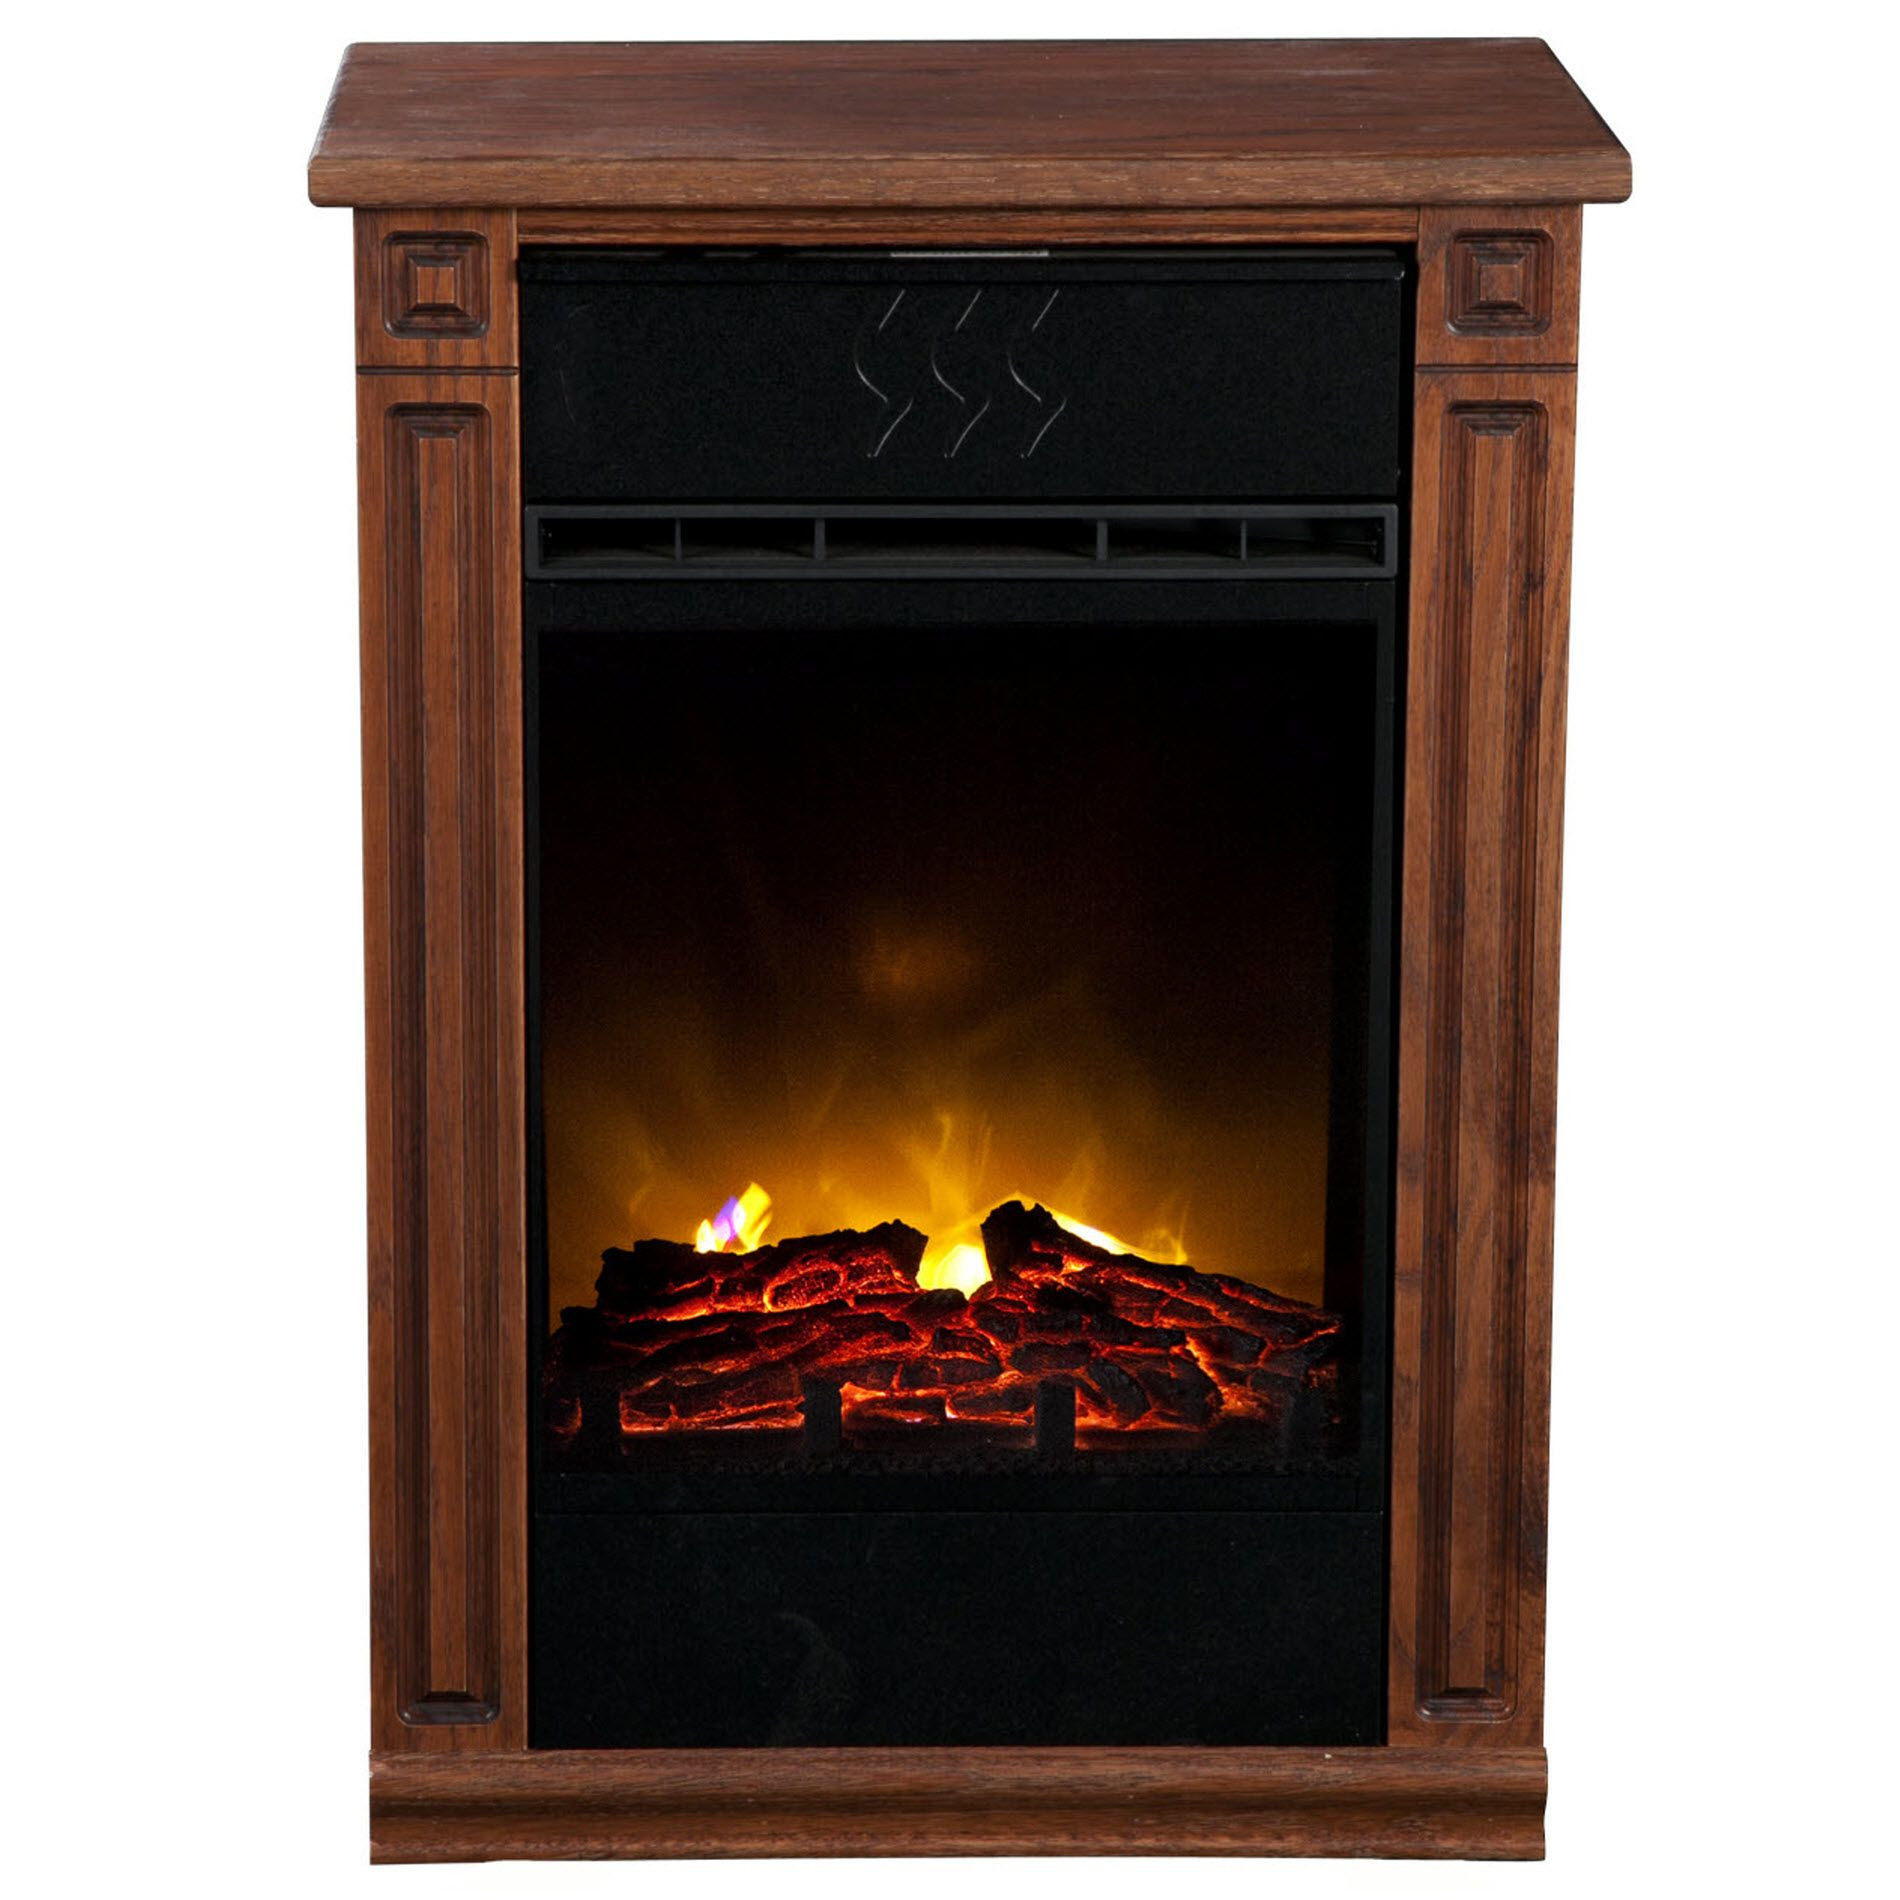 Best ideas about Heat Surge Electric Fireplace
. Save or Pin Heat Surge Accent Electric Fireplace Dark Oak Home Now.